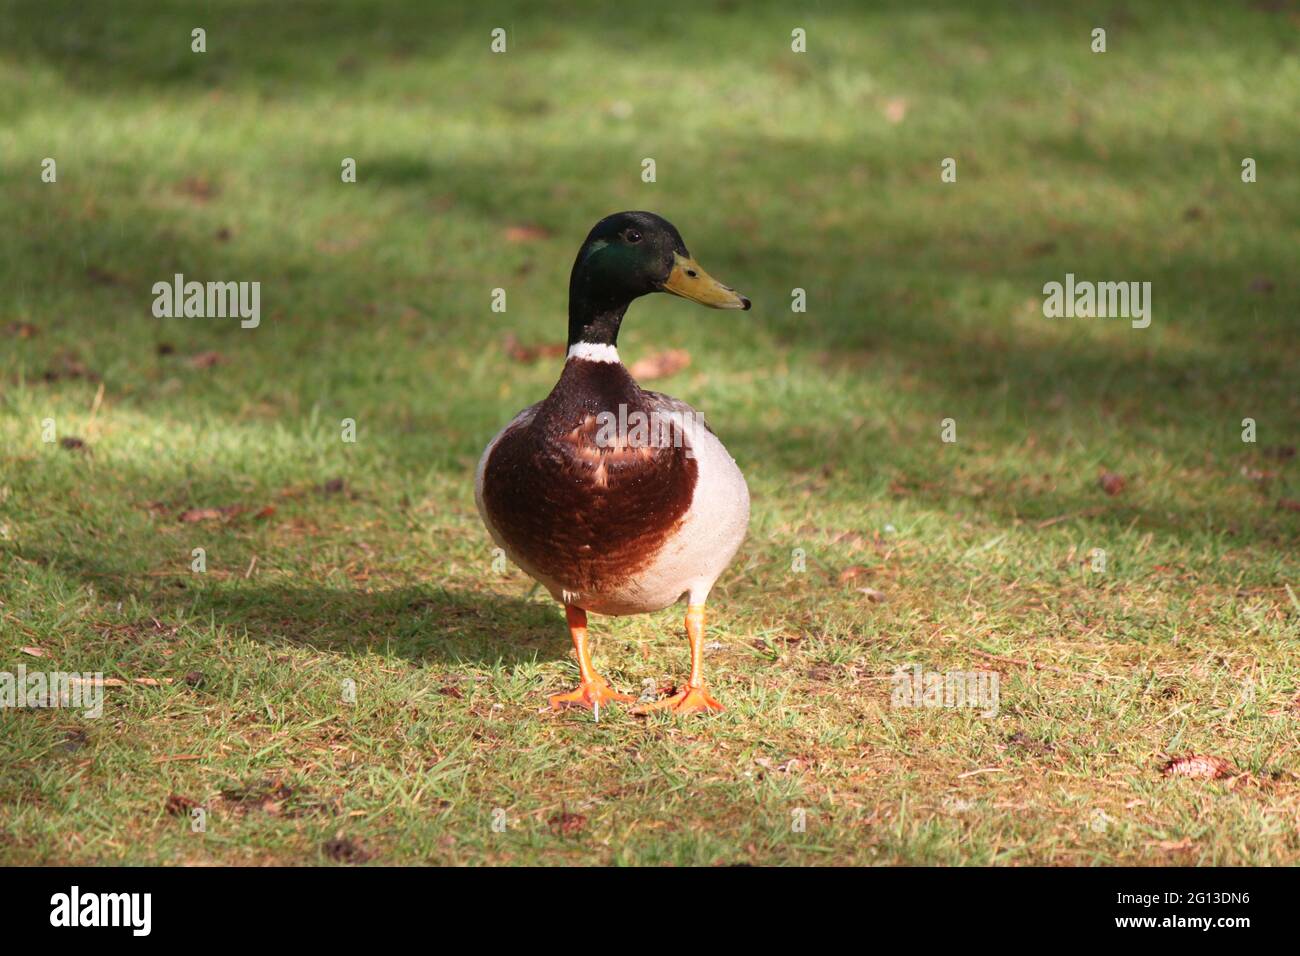 Mallard duck walking through public park. Stock Photo